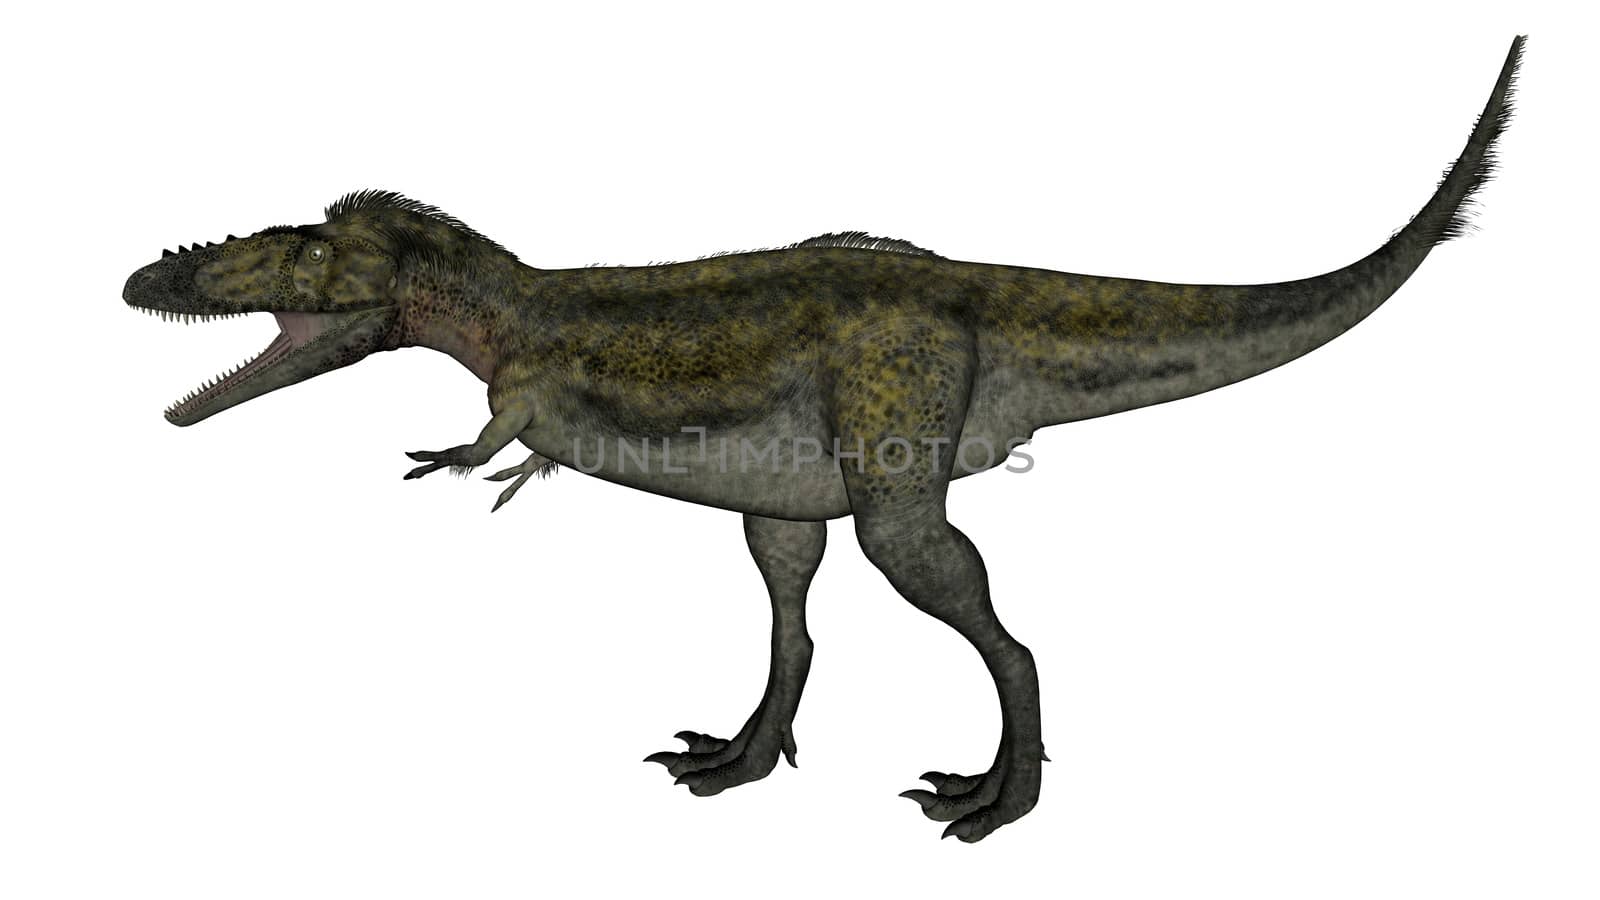 Alioramus dinosaur walking - 3D render by Elenaphotos21